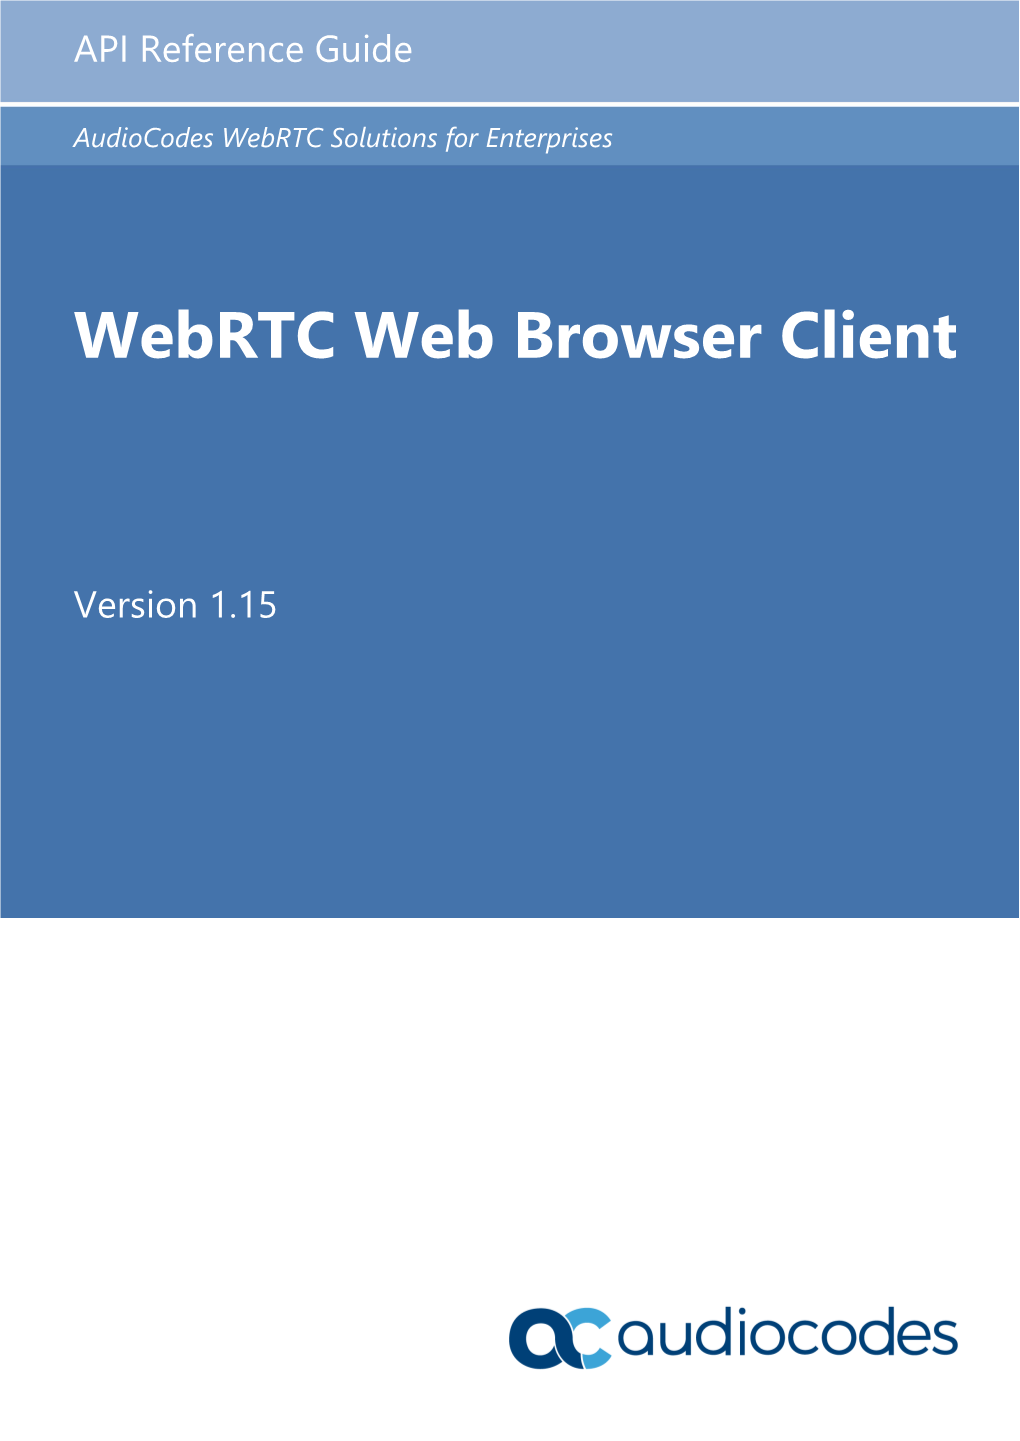 Webrtc Web Browser Client SDK API Reference Guide Ver. 1.15